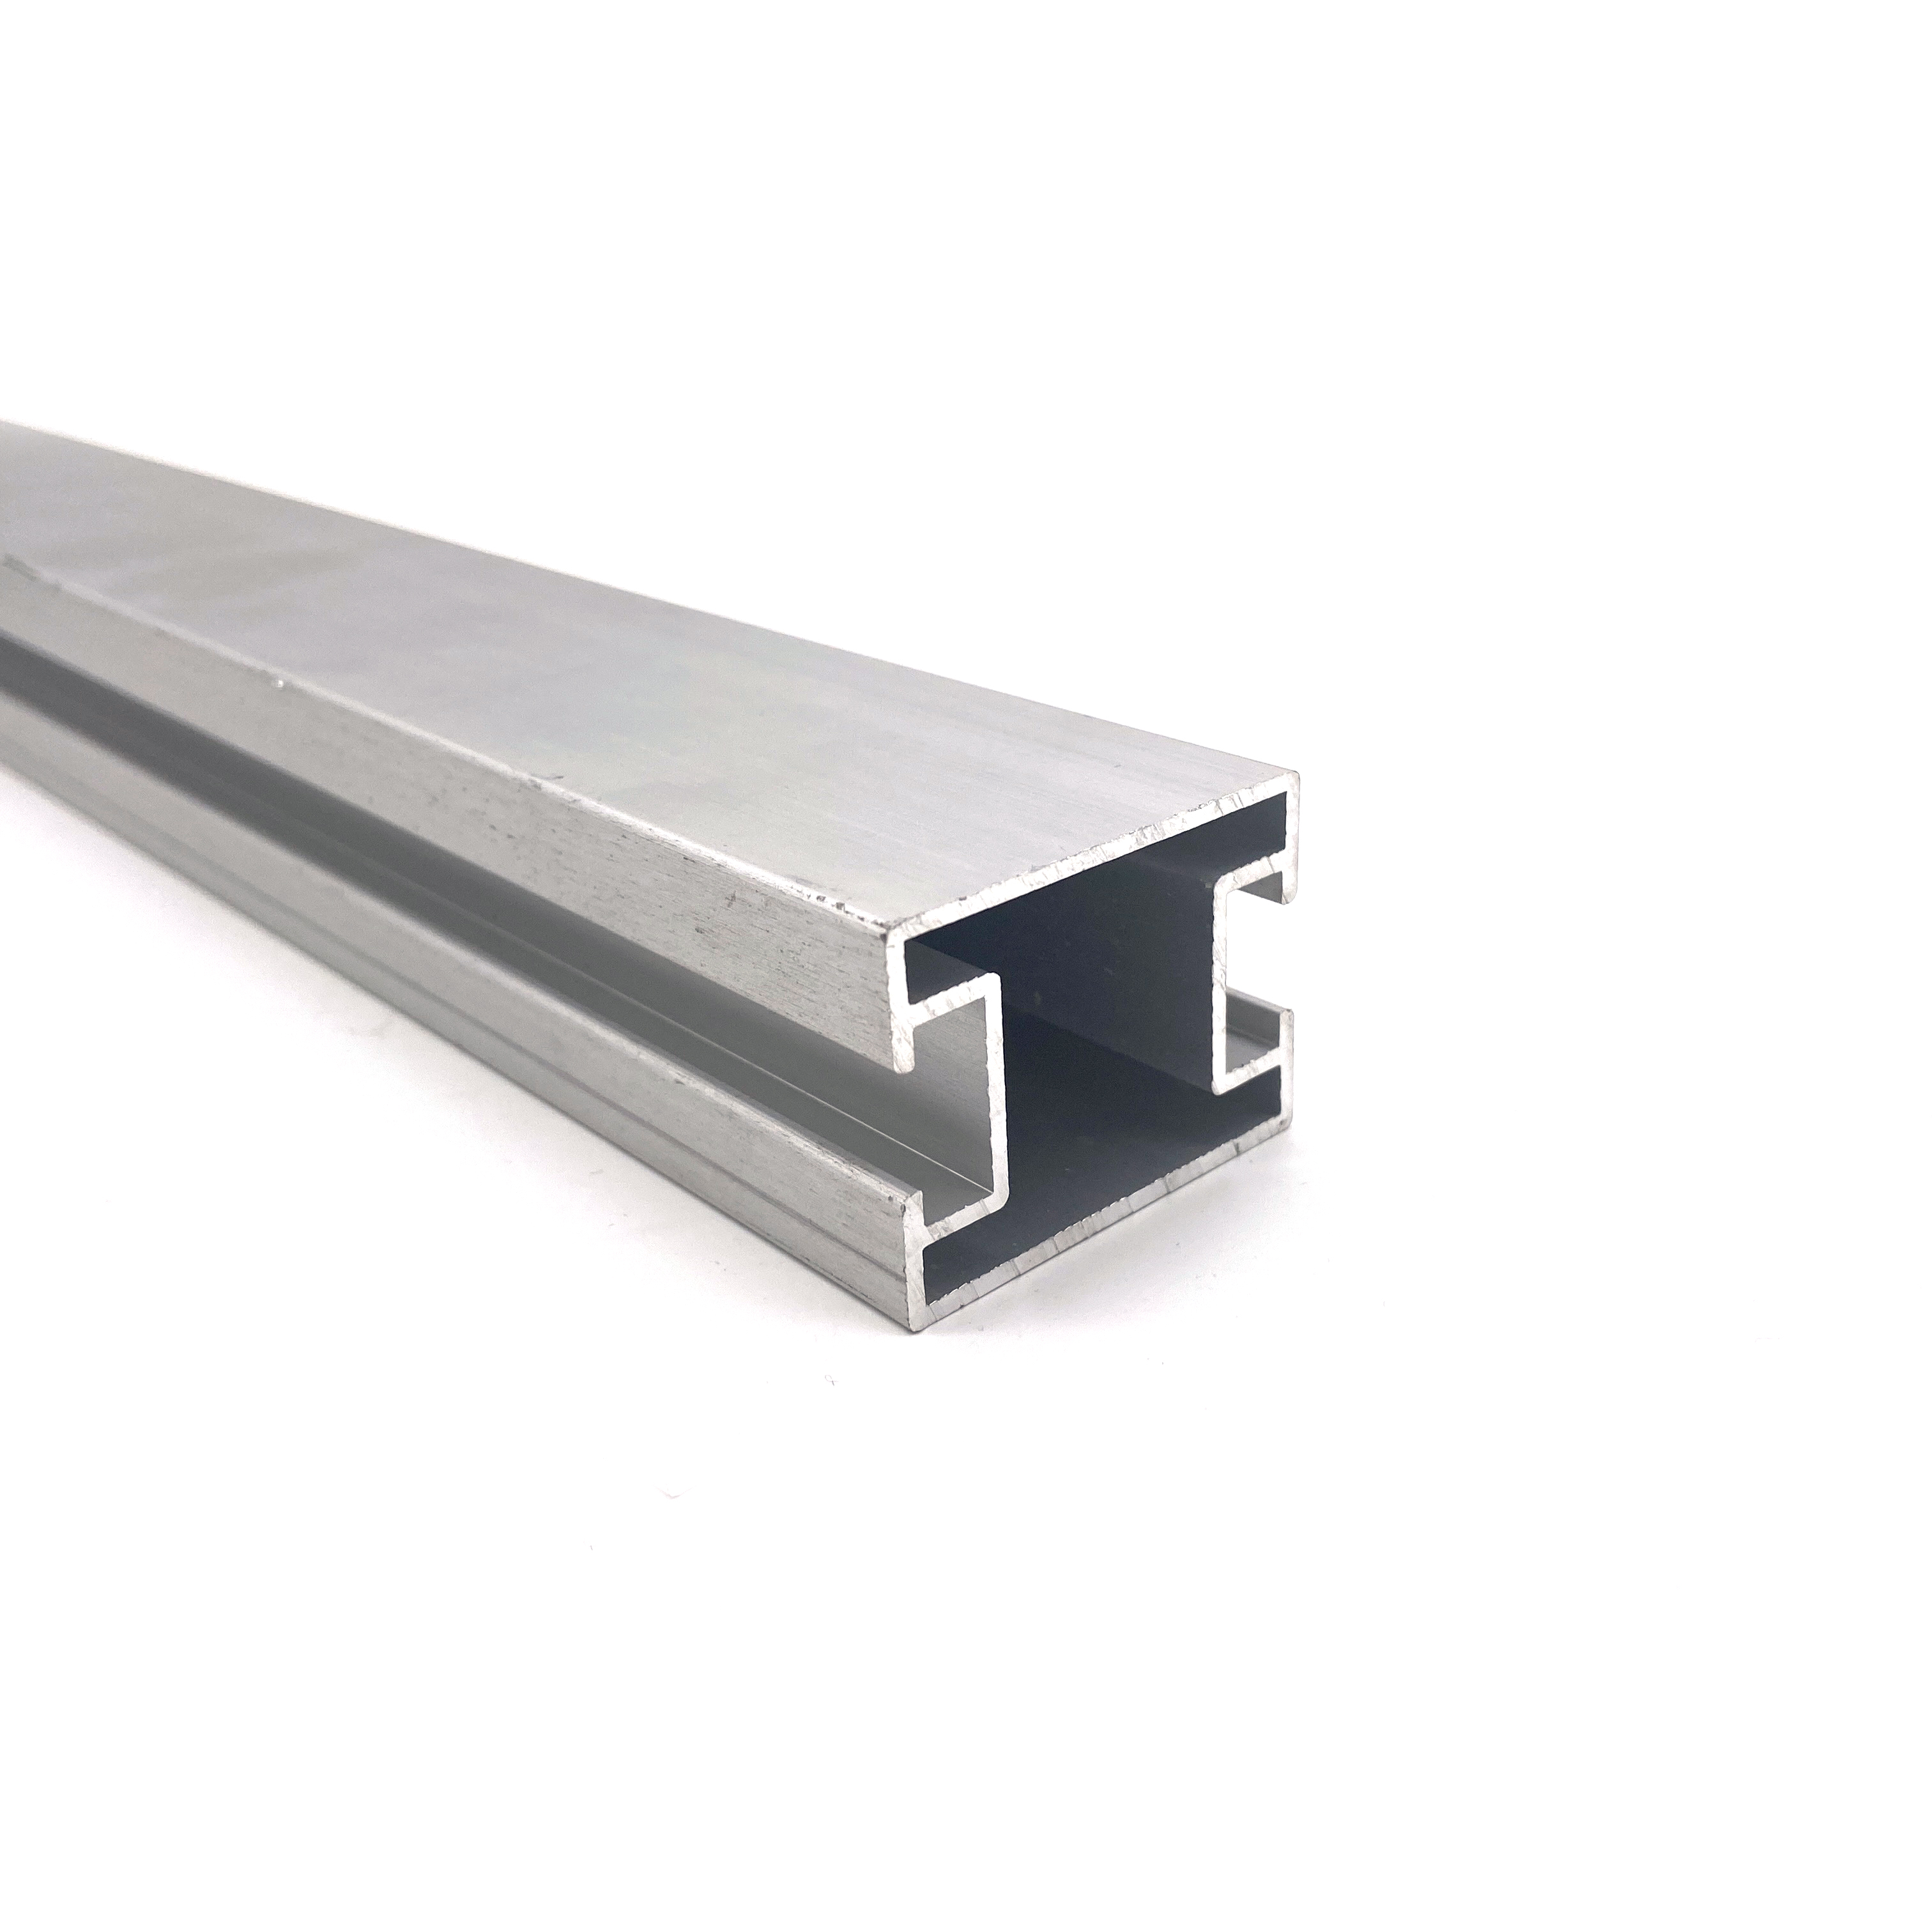 Anodisé 6063 T5 Profils d'aluminium extrudés extrudés personnalisés